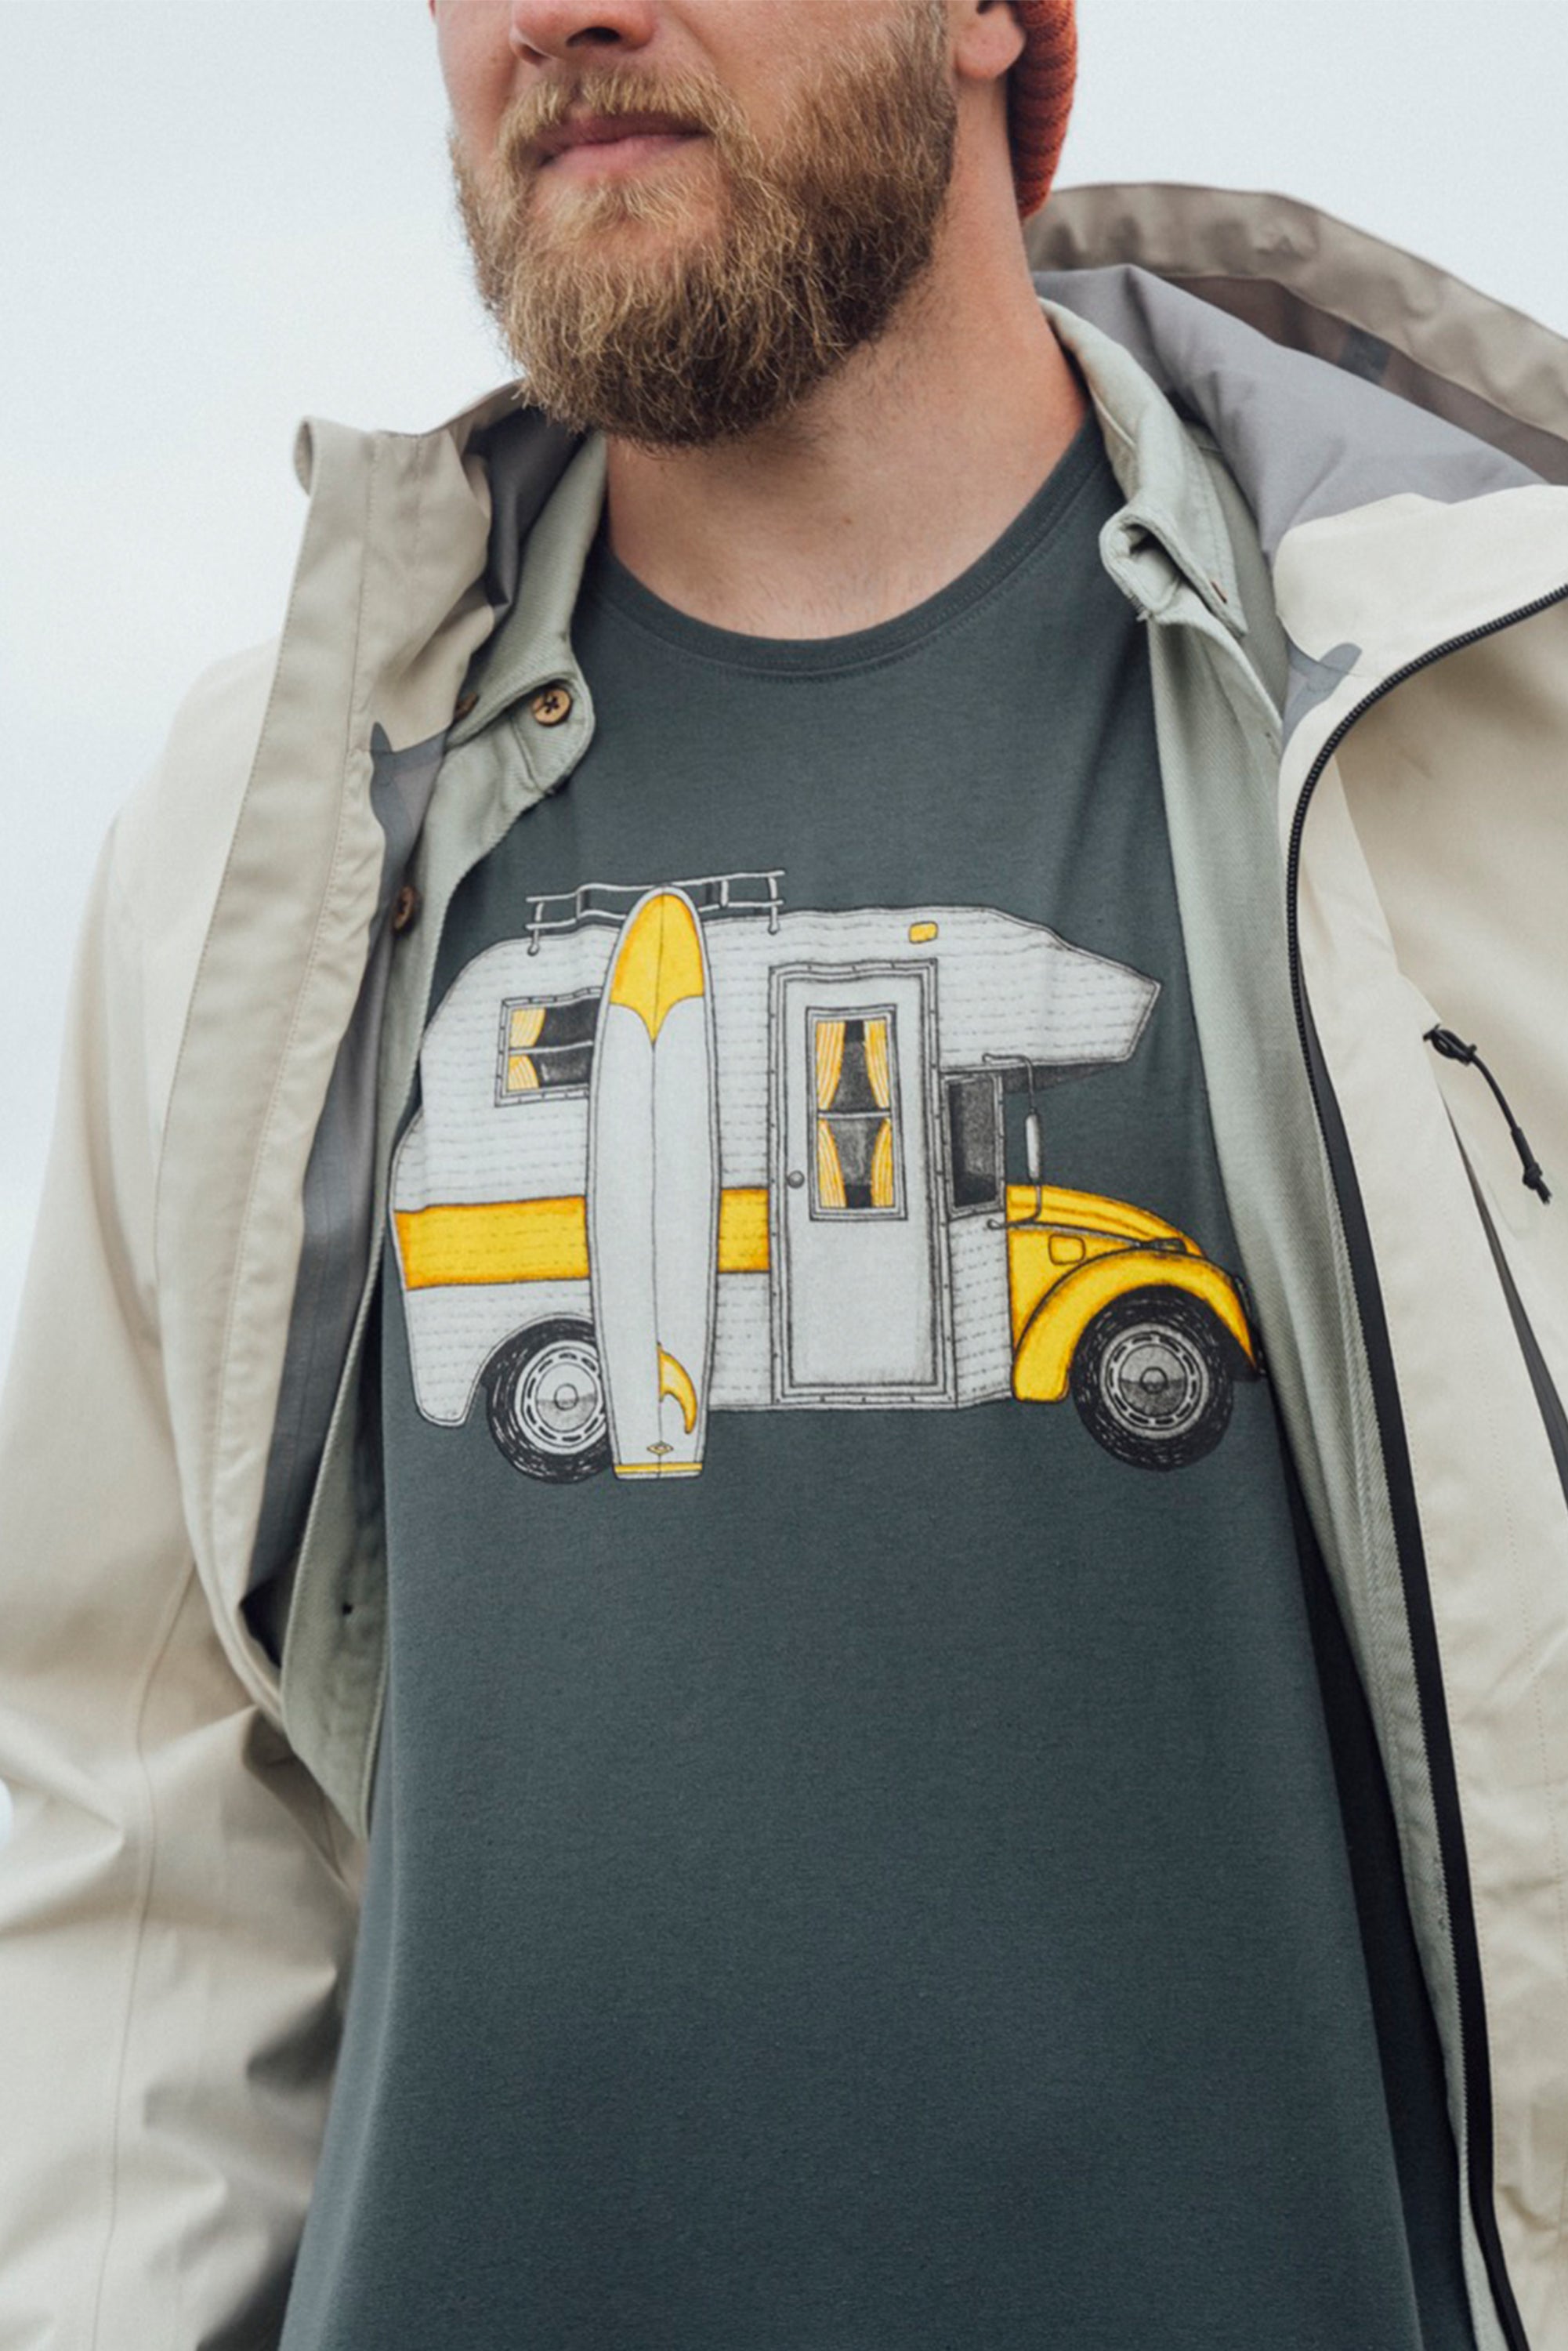 Car Camper T-shirt (Urban Chic)